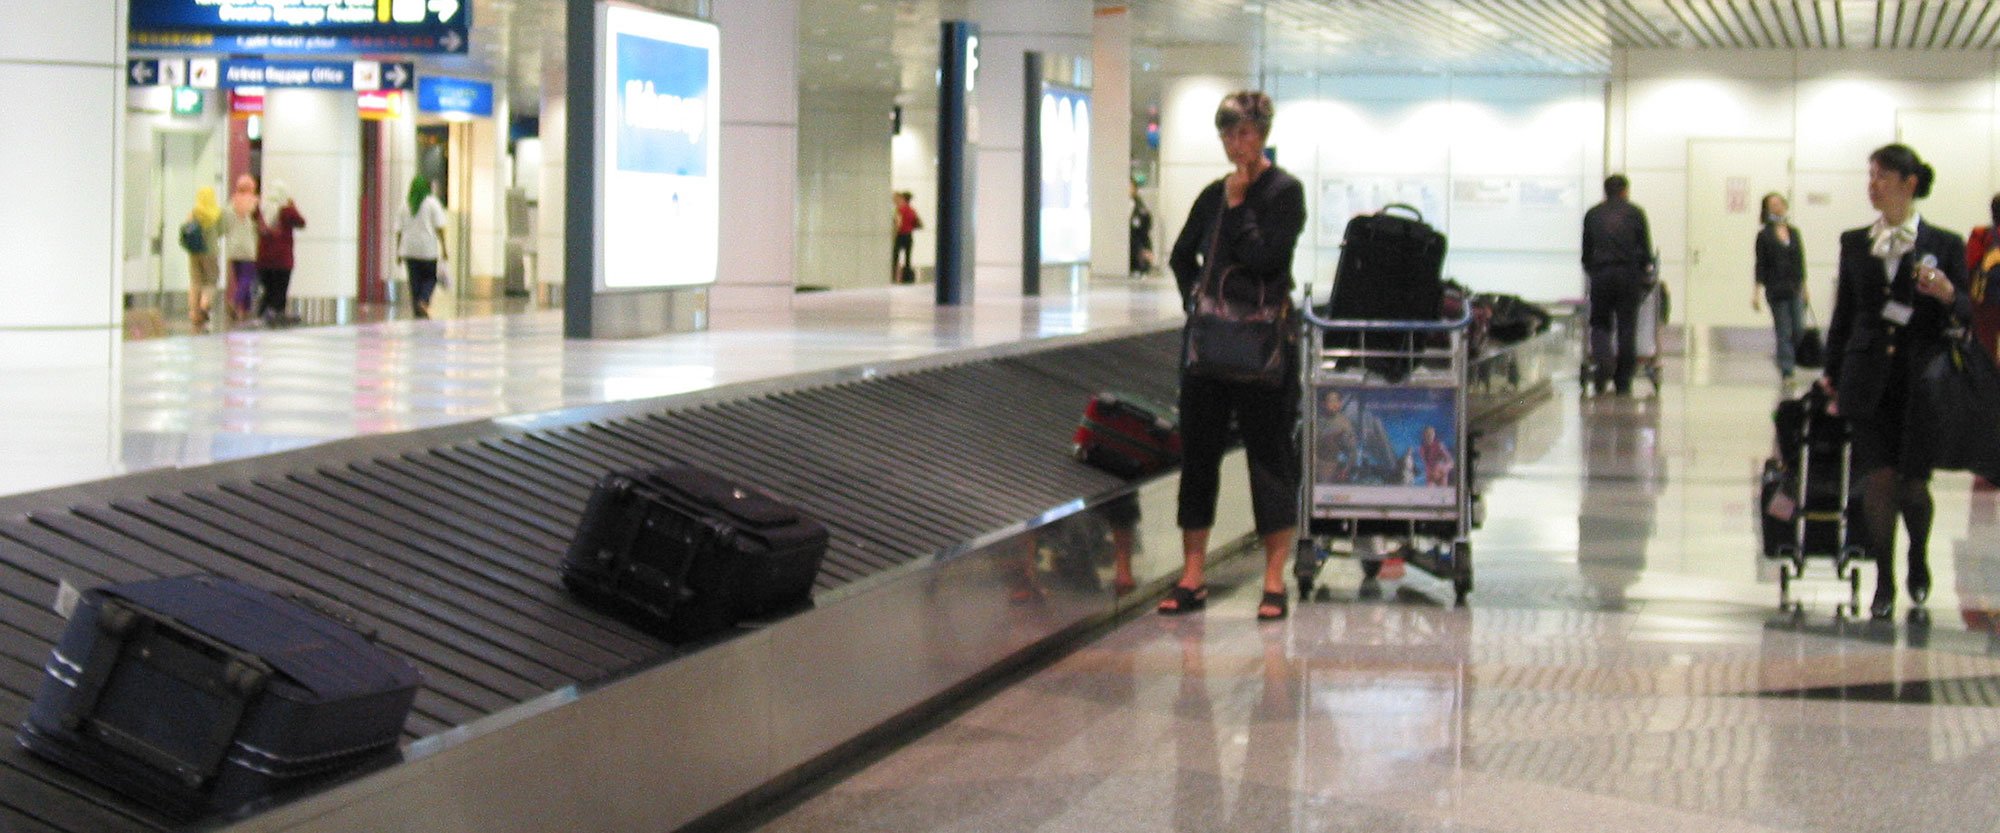 Baggage carousel at Kuala Lumpur International Airport